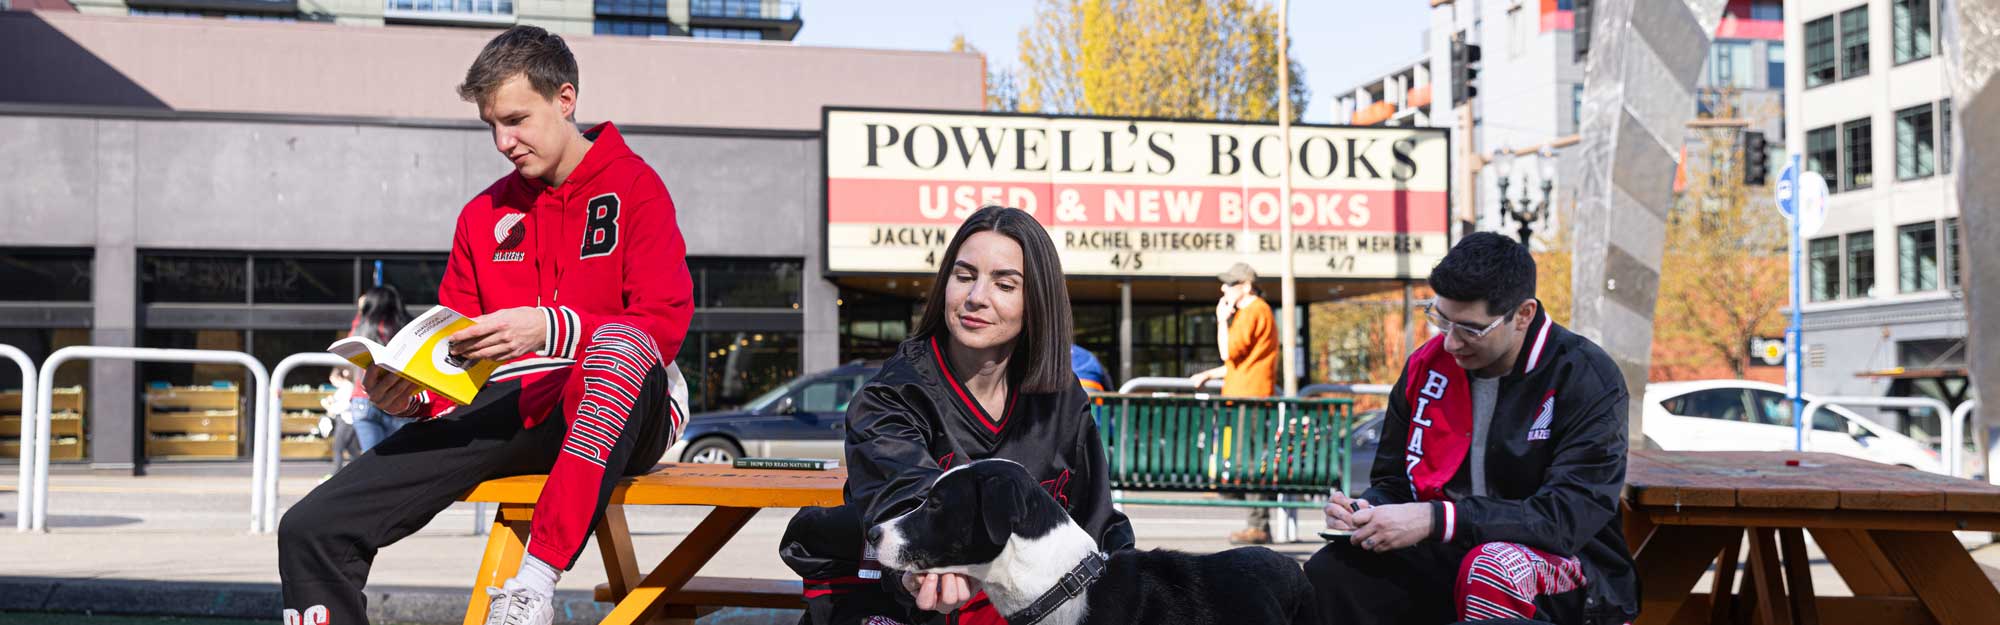 People in front of Powell's Bookstore wearing Blazers gear.